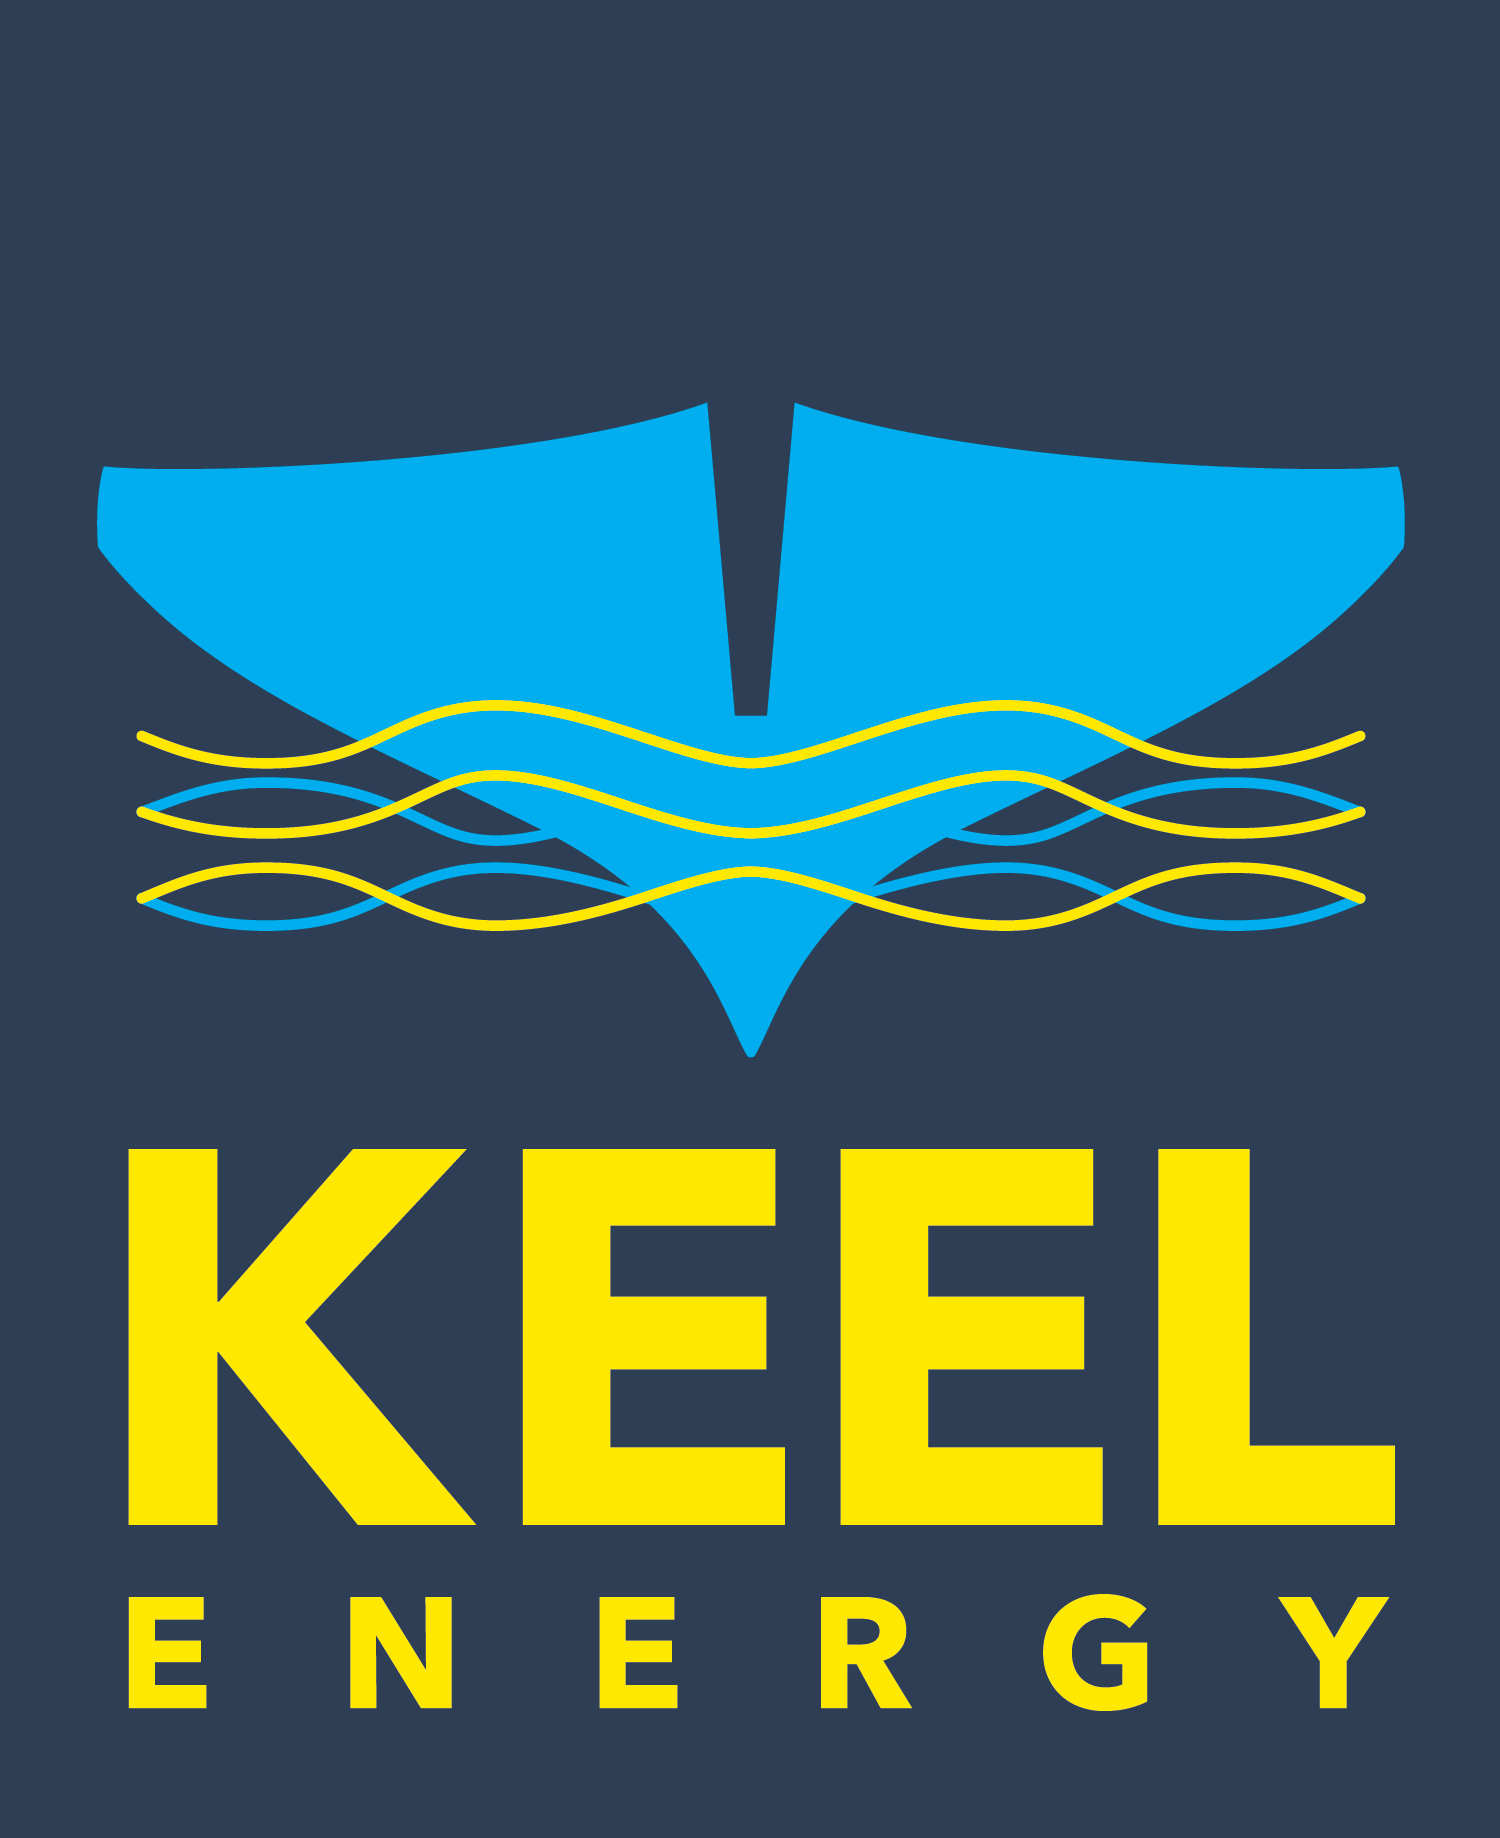 Keel Energy company logo